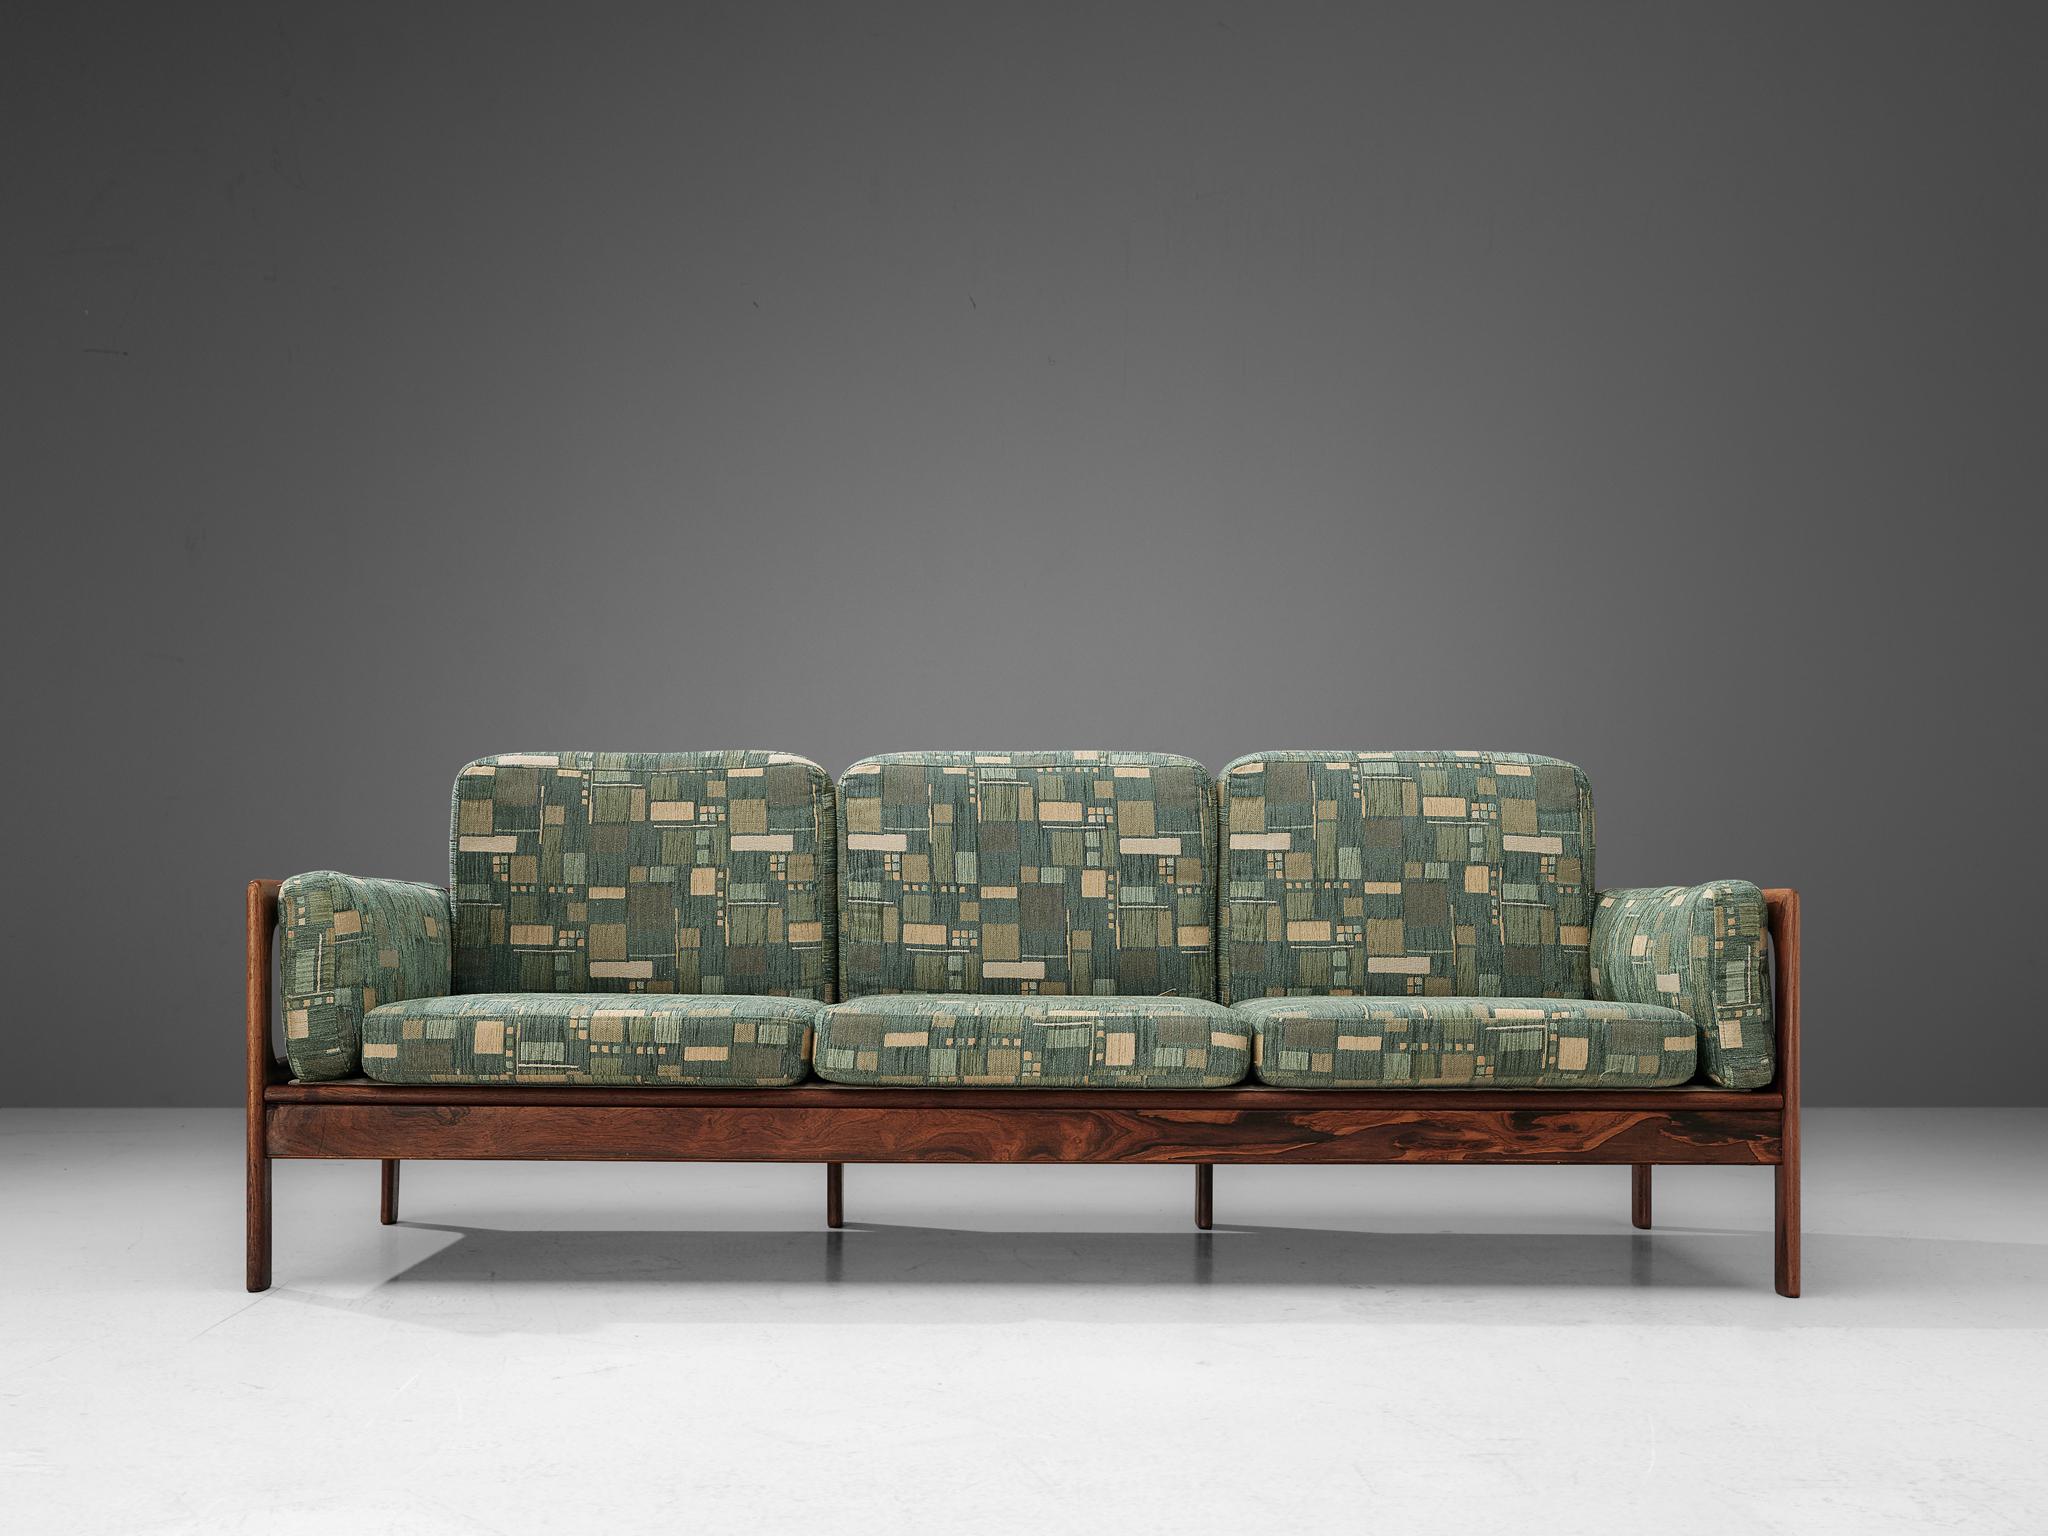 Scandinavian Modern Danish Sofa in Green Patterned Upholstery